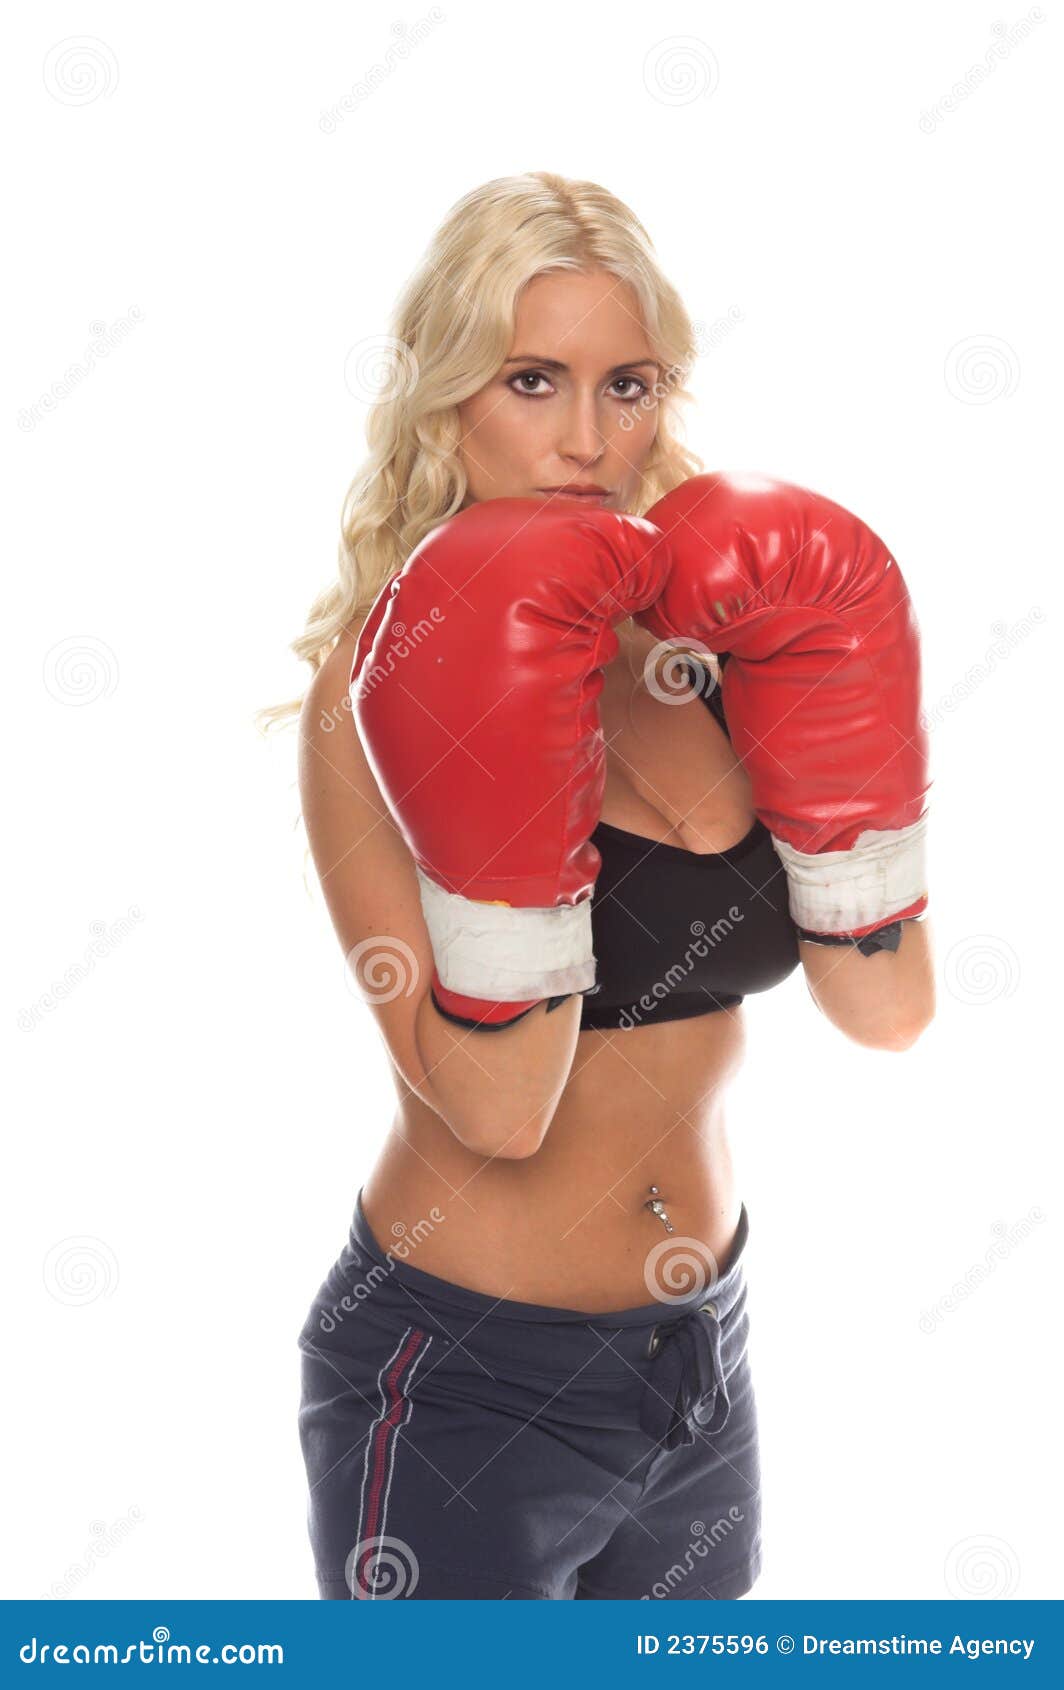 cardio boxing defense